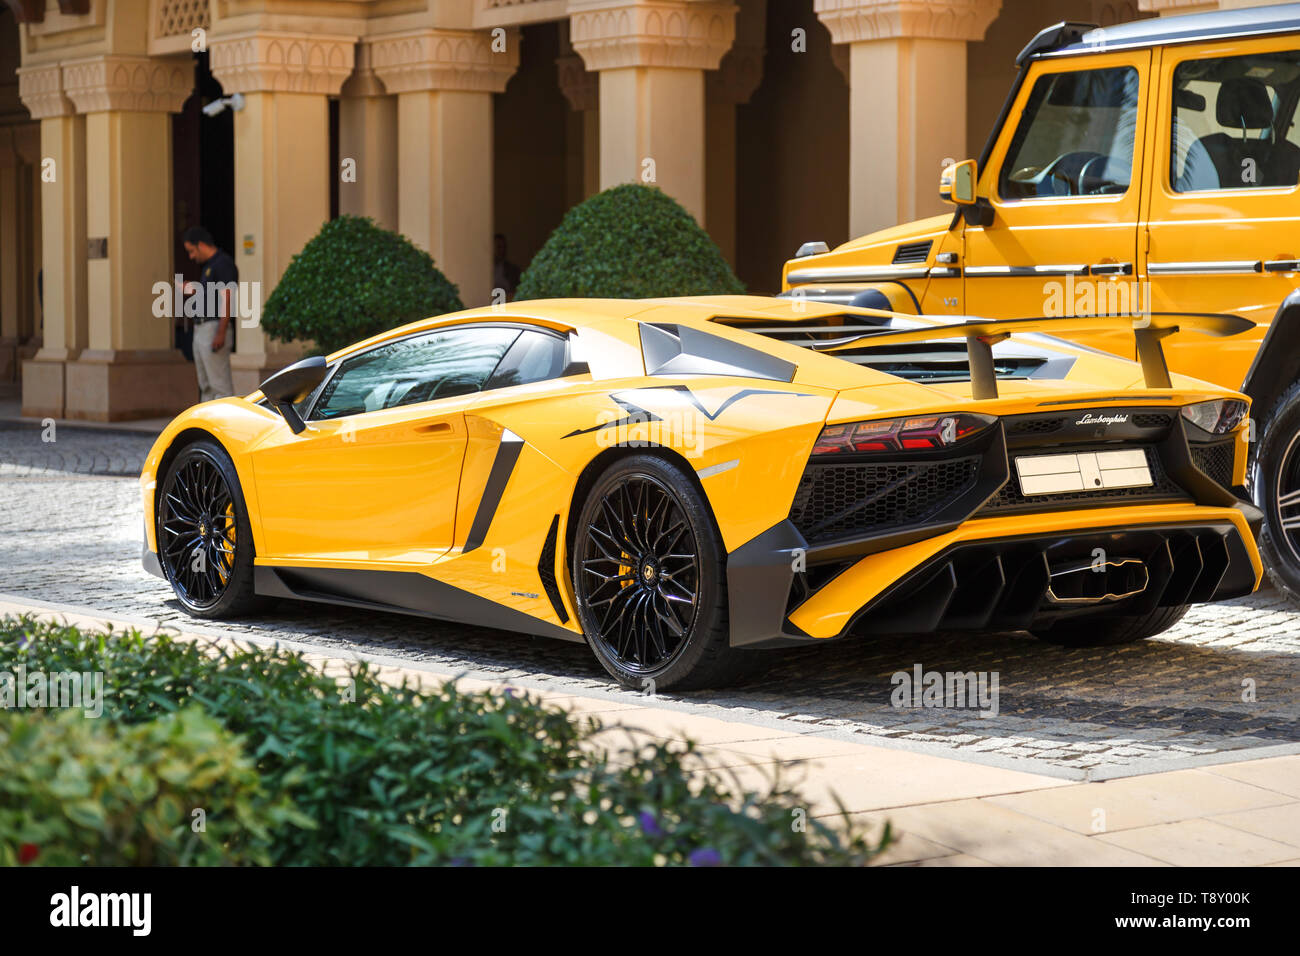 DUBAI, UAE - JANUARY 08, 2019: yellow luxury supercar Lamborghini Aventador Roadster and Gelandewagen. Stock Photo